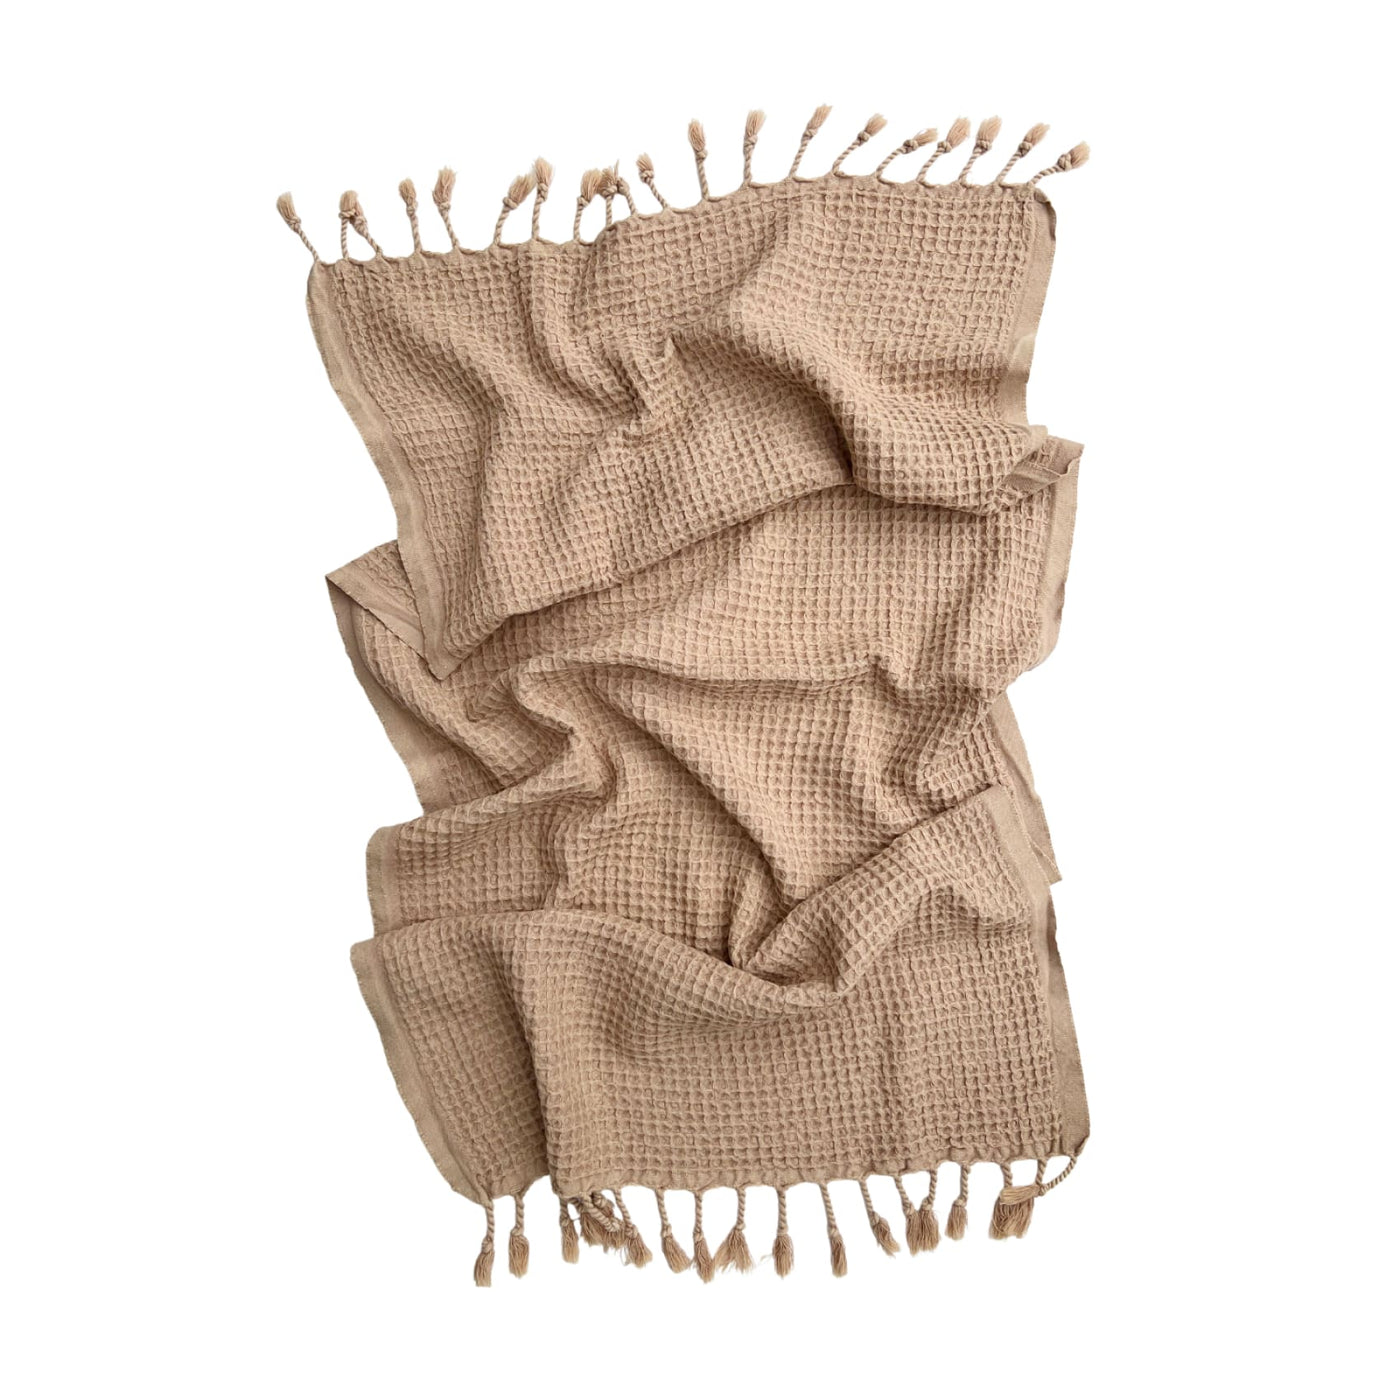 Rulo - Hand Hair & Tea Towel - Hand Towel